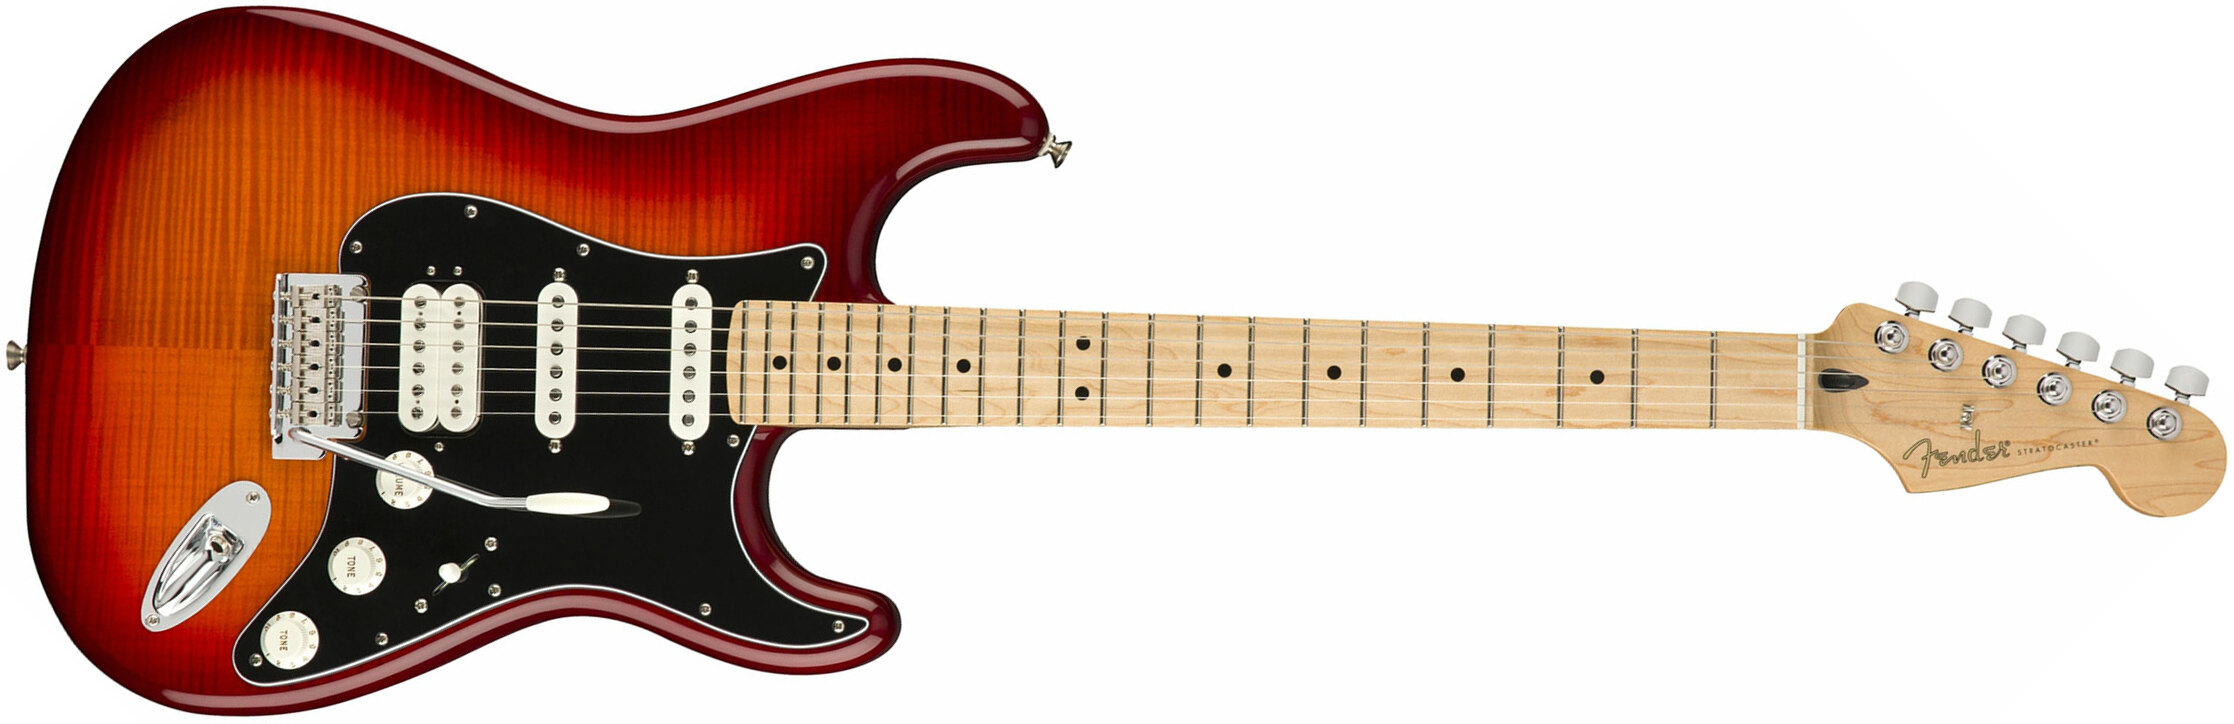 Fender Strat Player Plus Top Mex Hss Mn - Aged Cherry Burst - Str shape electric guitar - Main picture